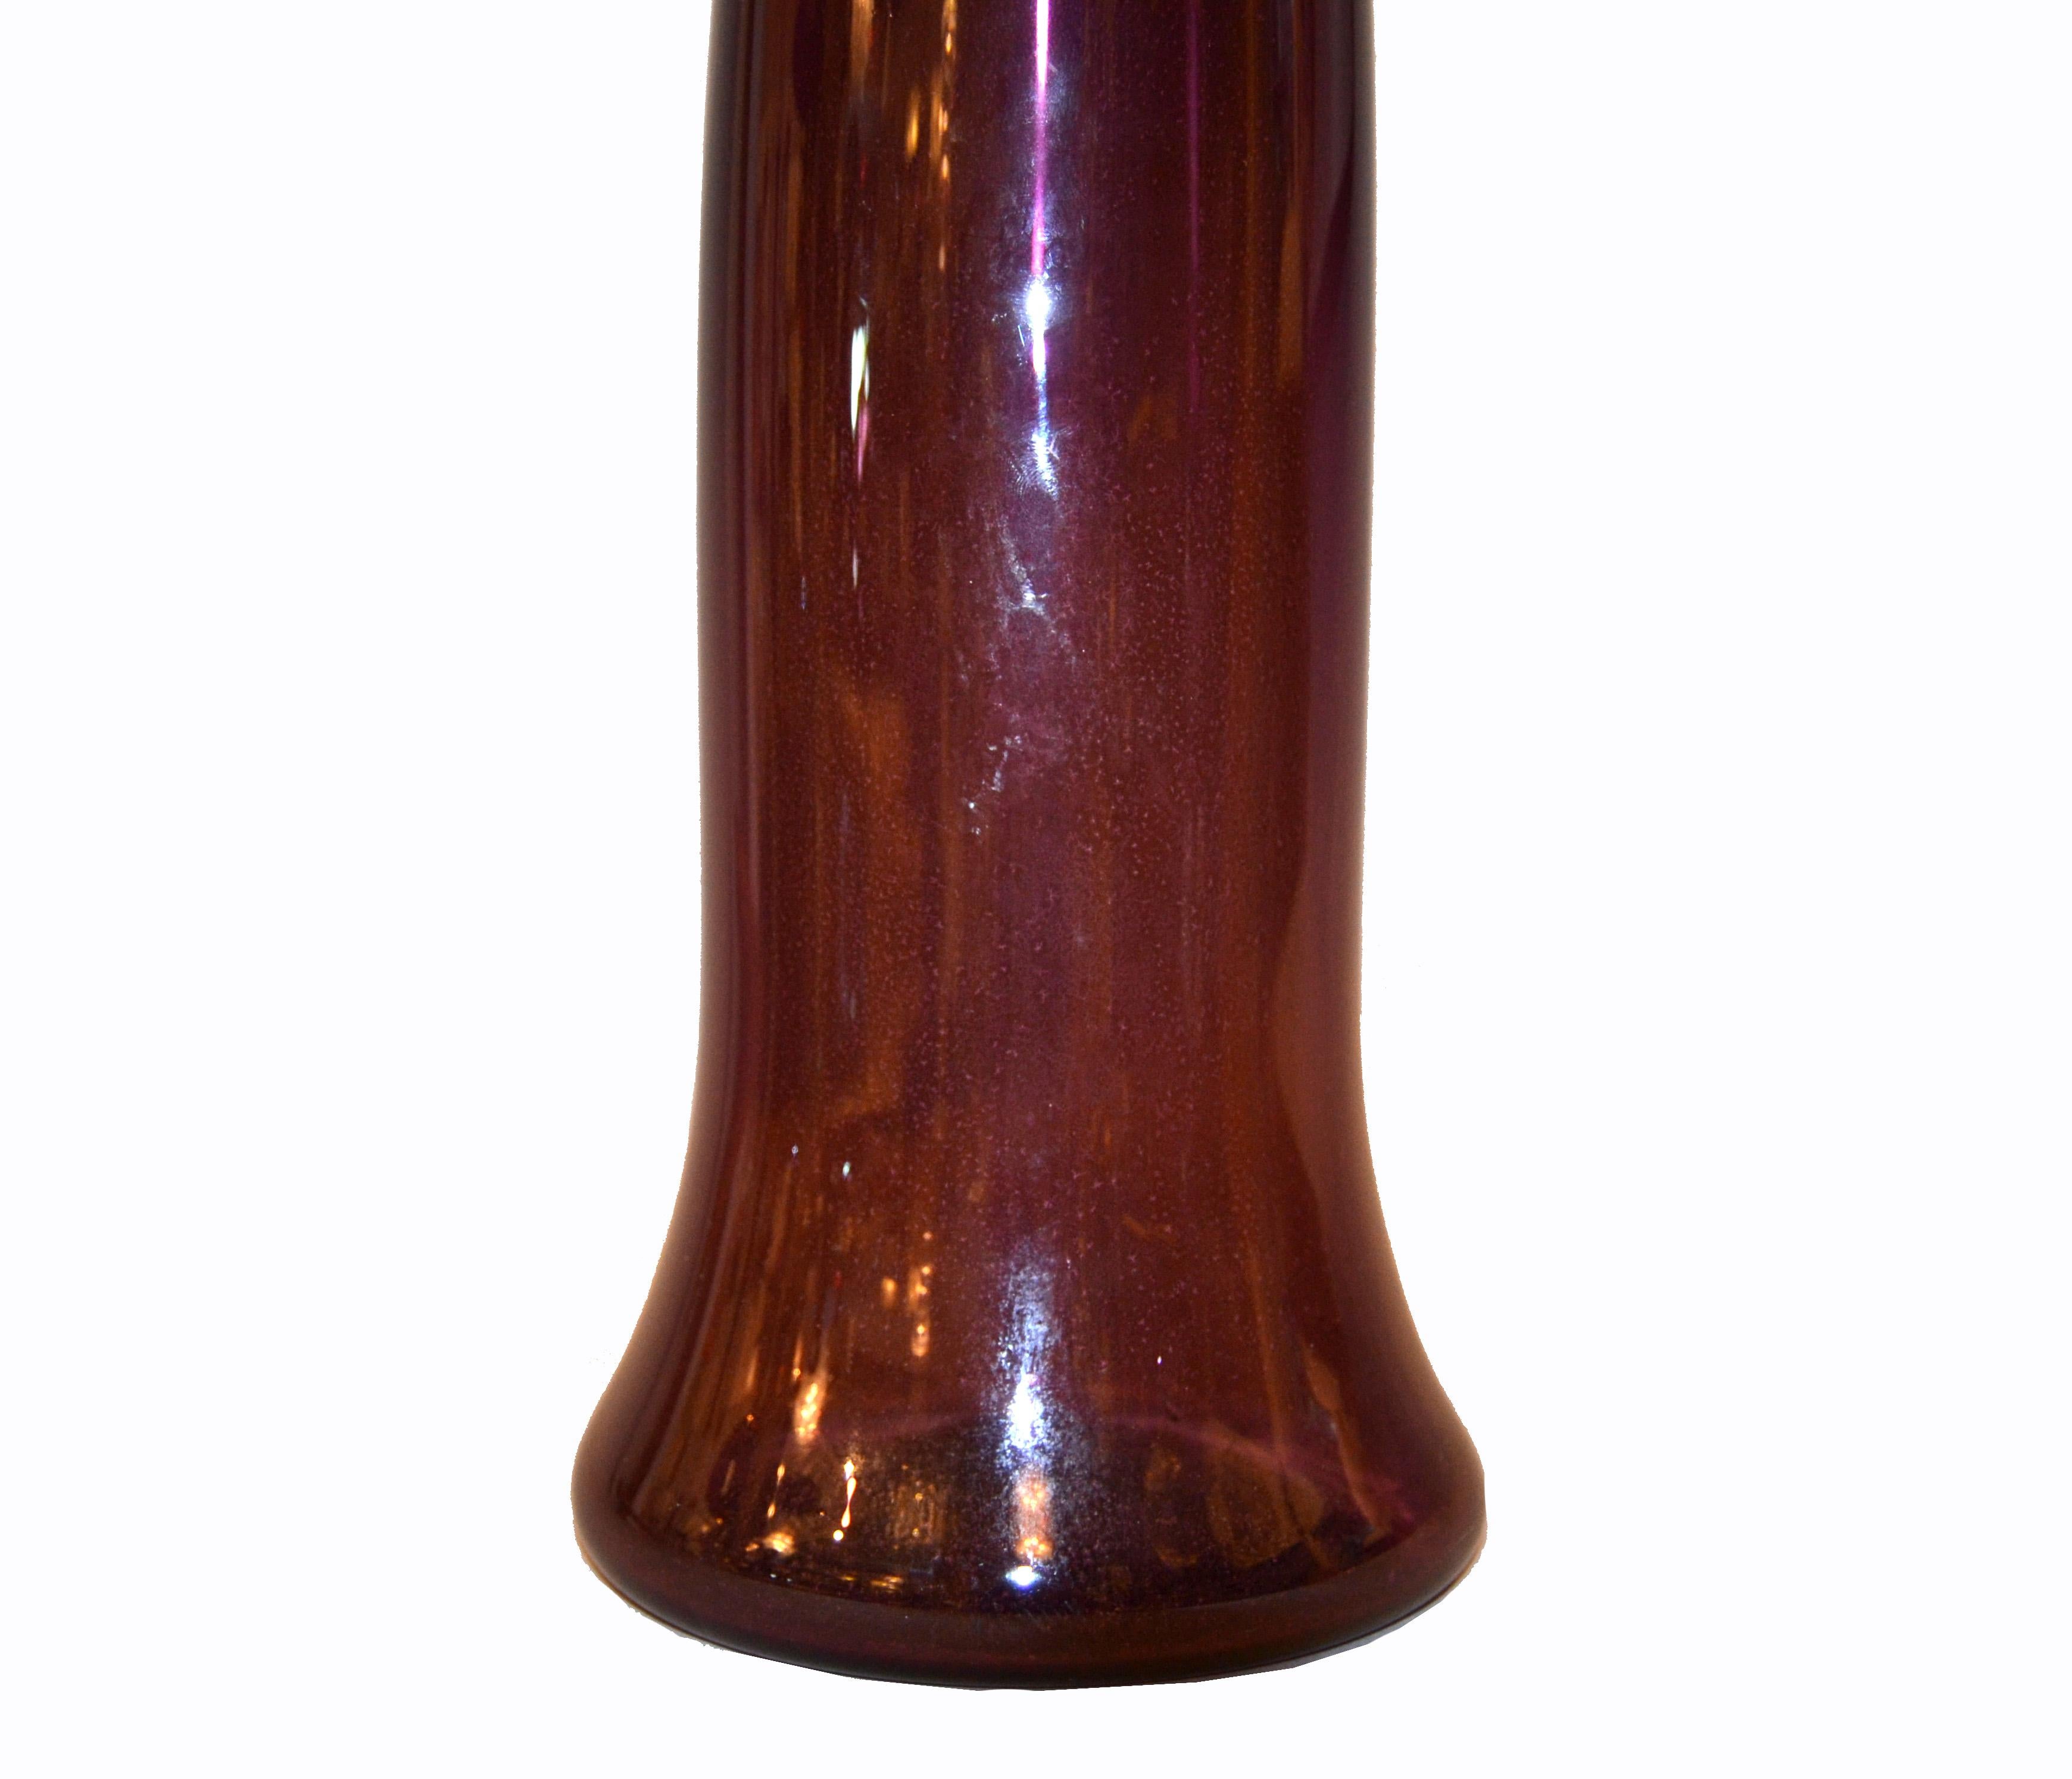 20th Century Mid-Century Modern Hand-Blown Amethyst Purple Art Glass Vase Vessel Decanter For Sale